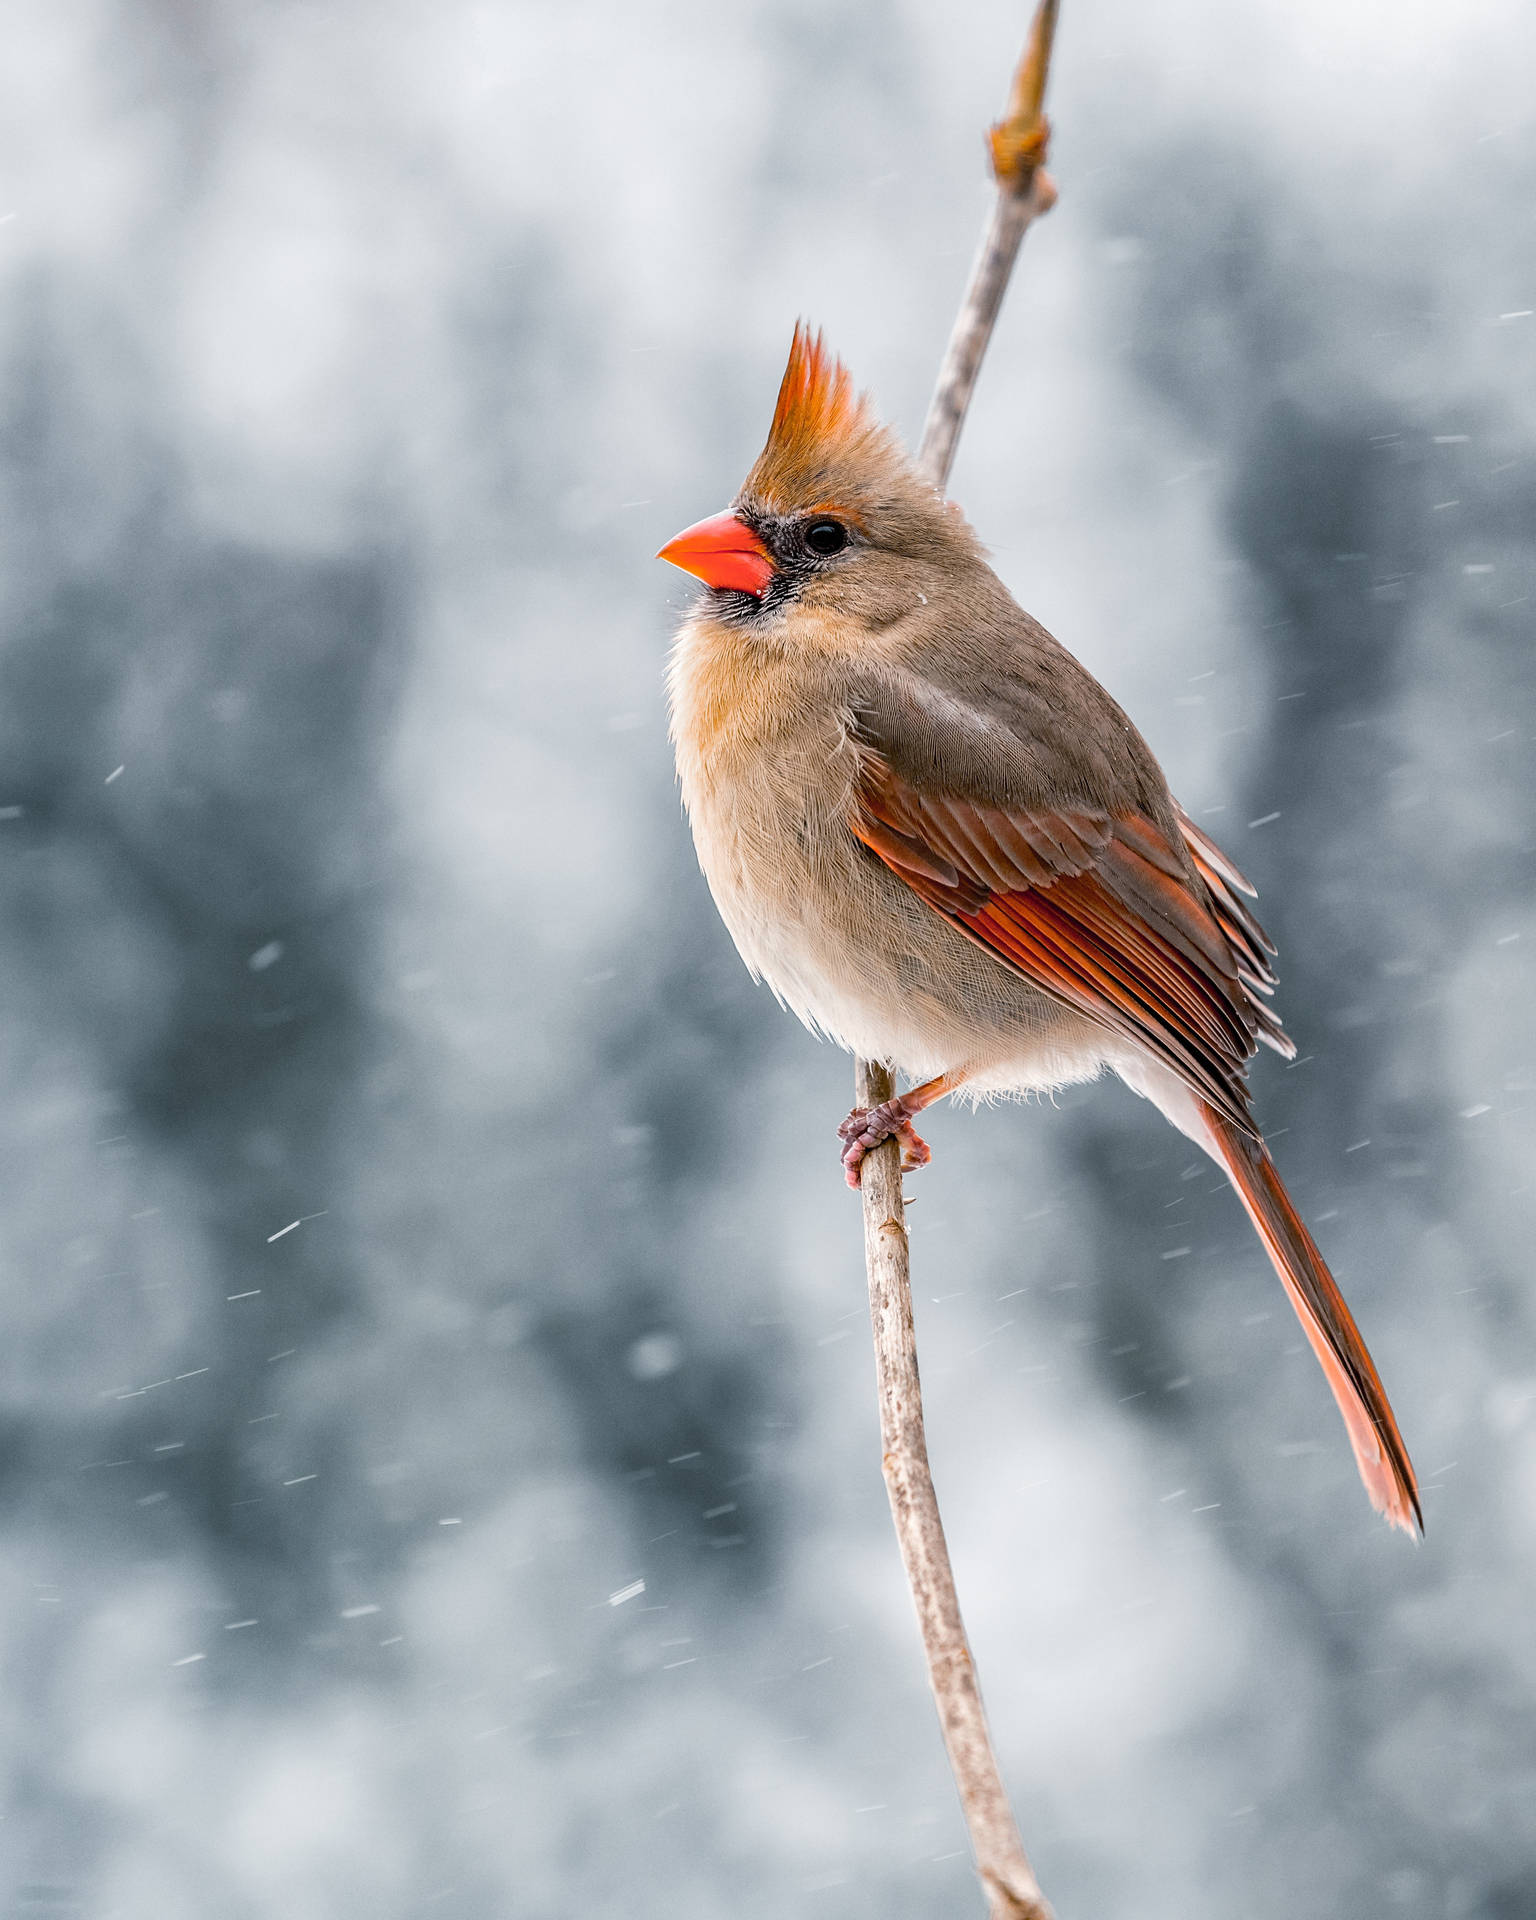 Stunning Female Cardinal Amidst Winter Backdrop Wallpaper